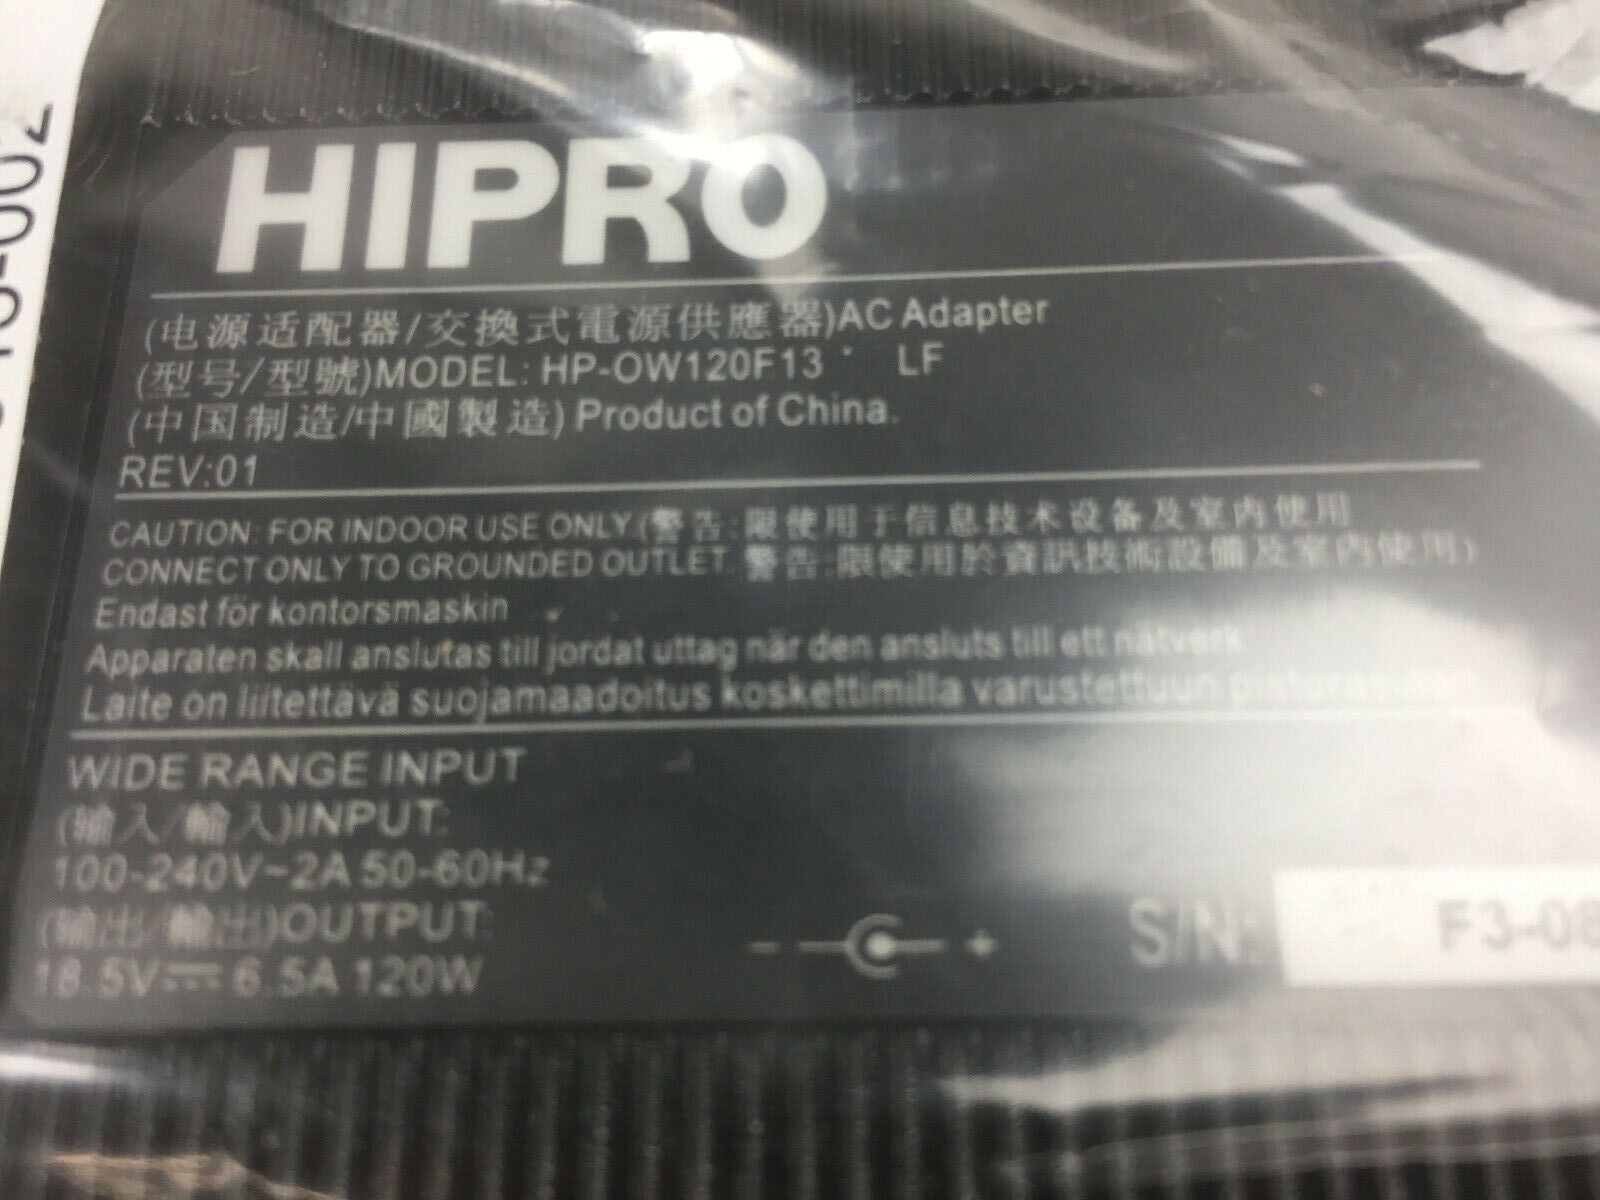 HIPRO HP-OW120F13 AC Adapter Input:100-240V ~2A 50-60Hz Output:18.5V 6.5A 120W